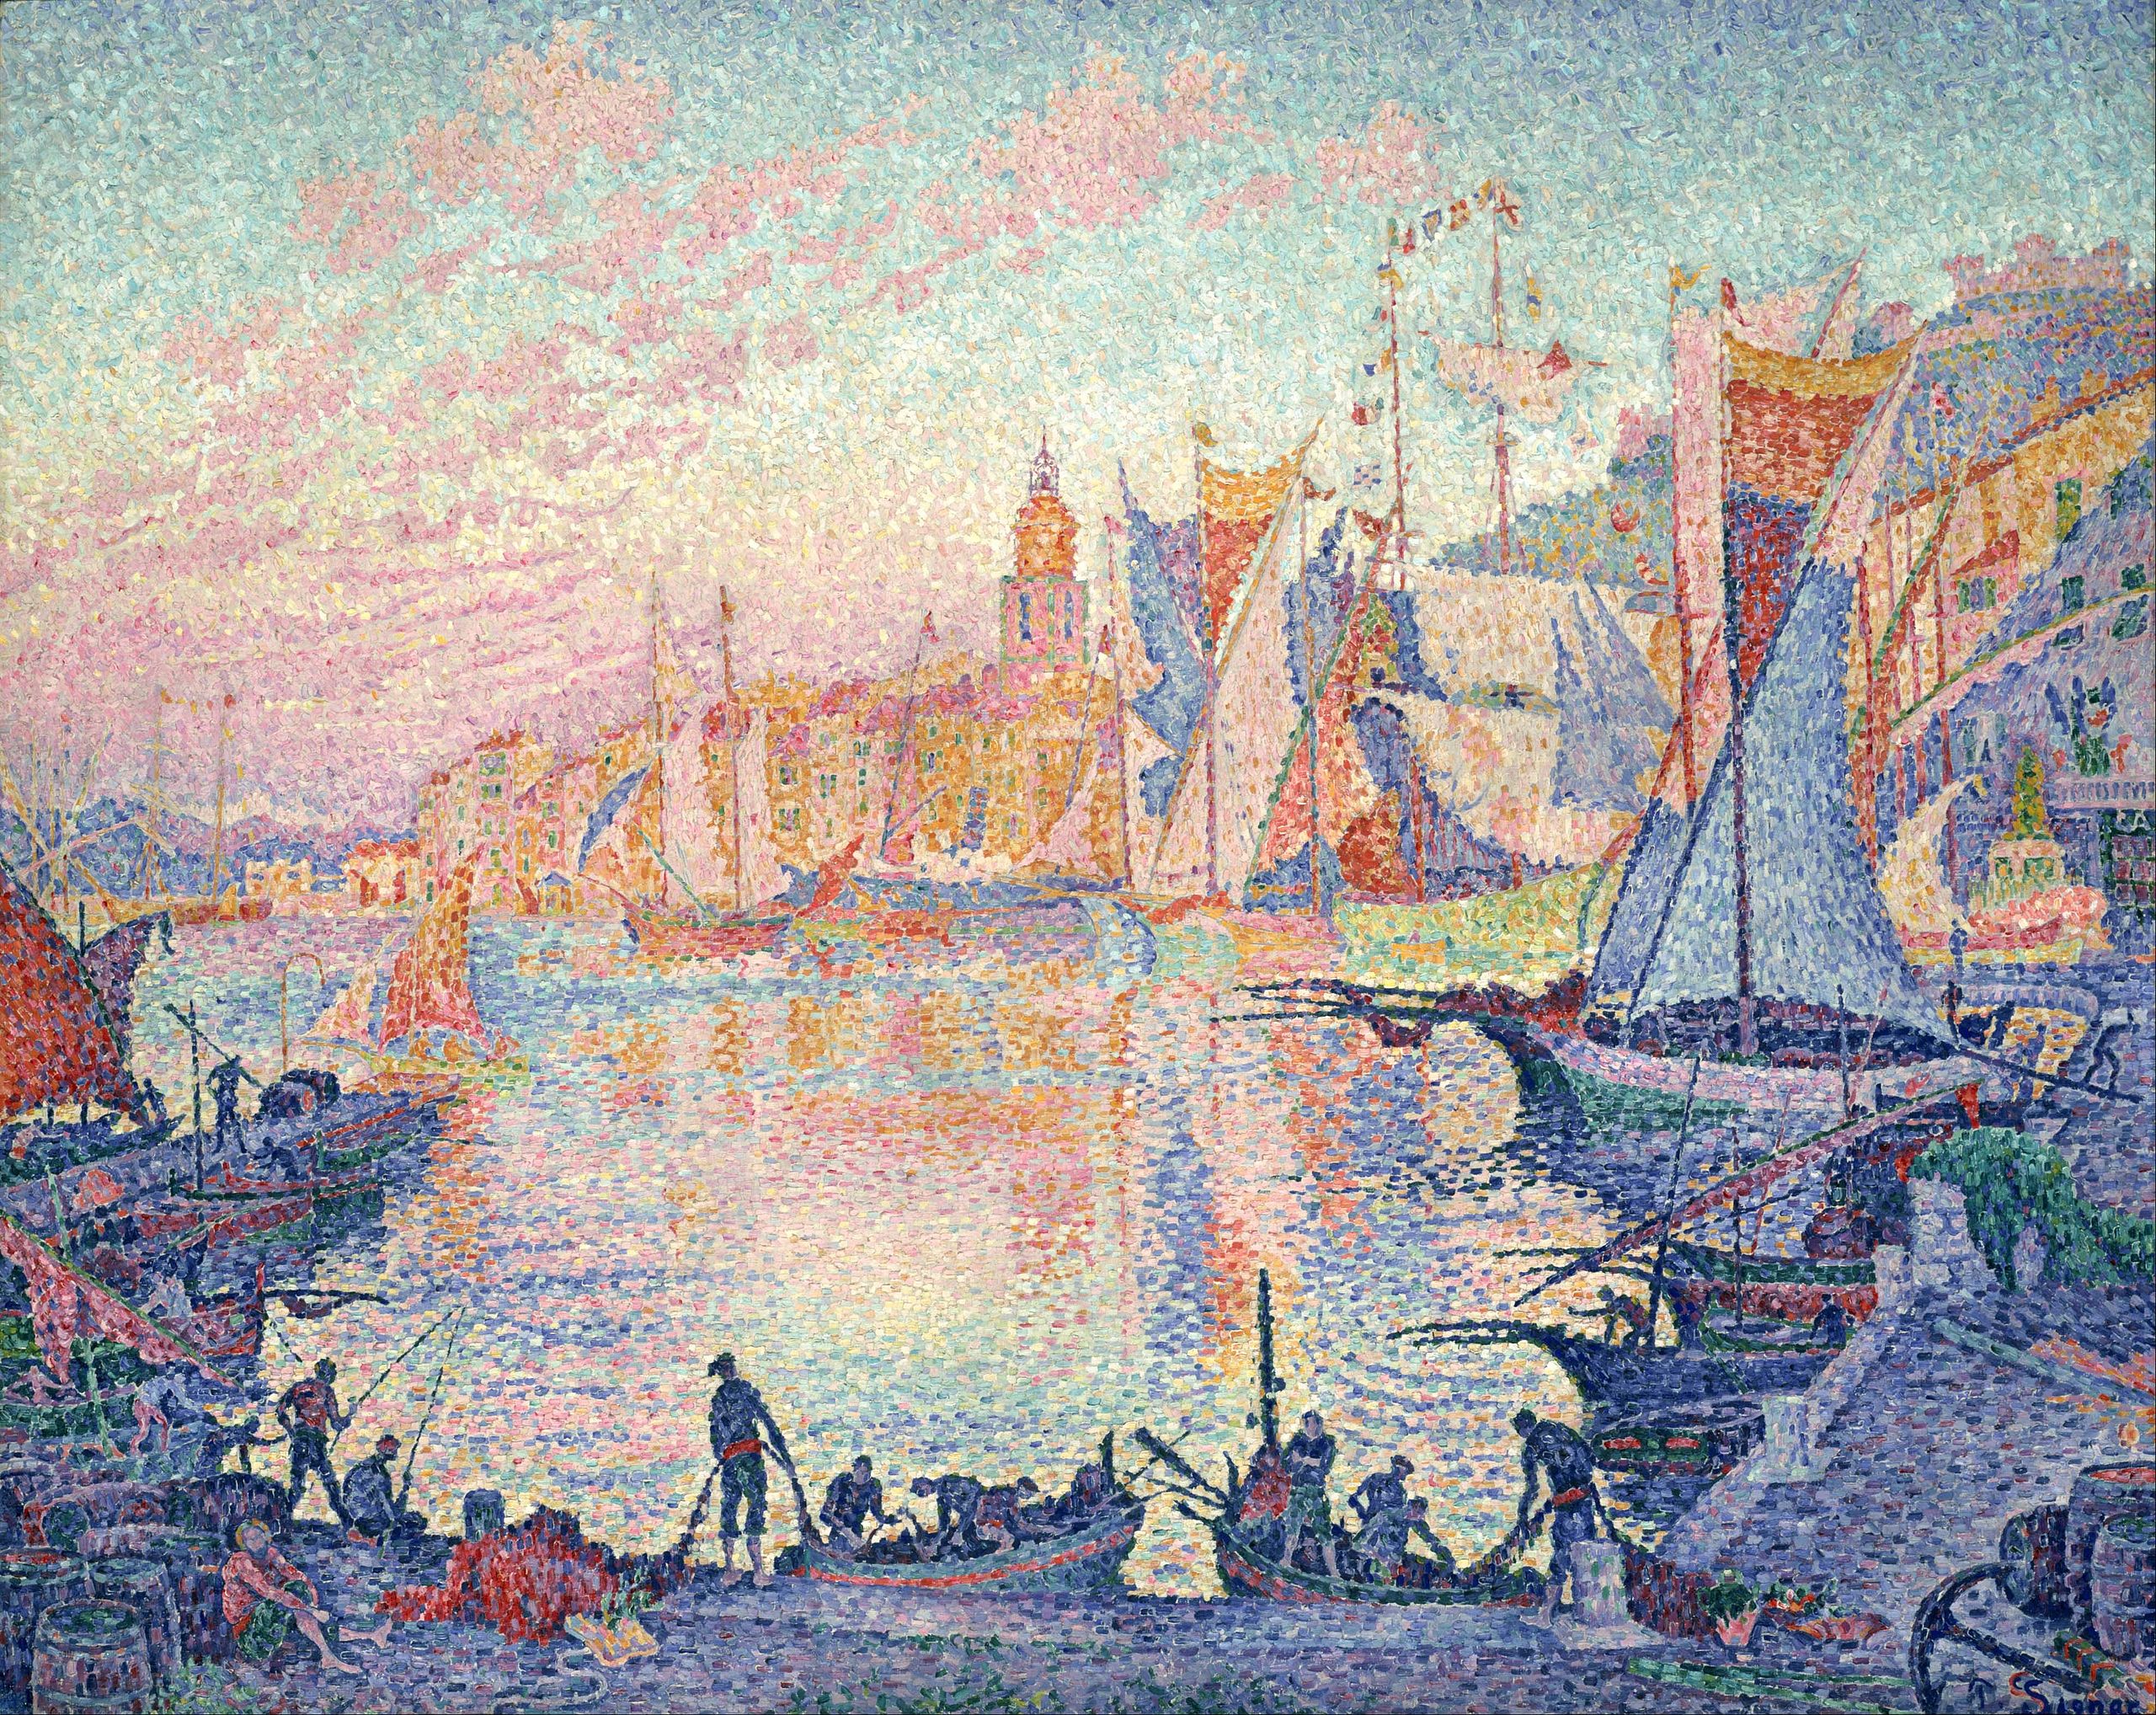 Portul Saint-Tropez by Paul Signac - 1901-1902 - 131 x 161.5 cm 